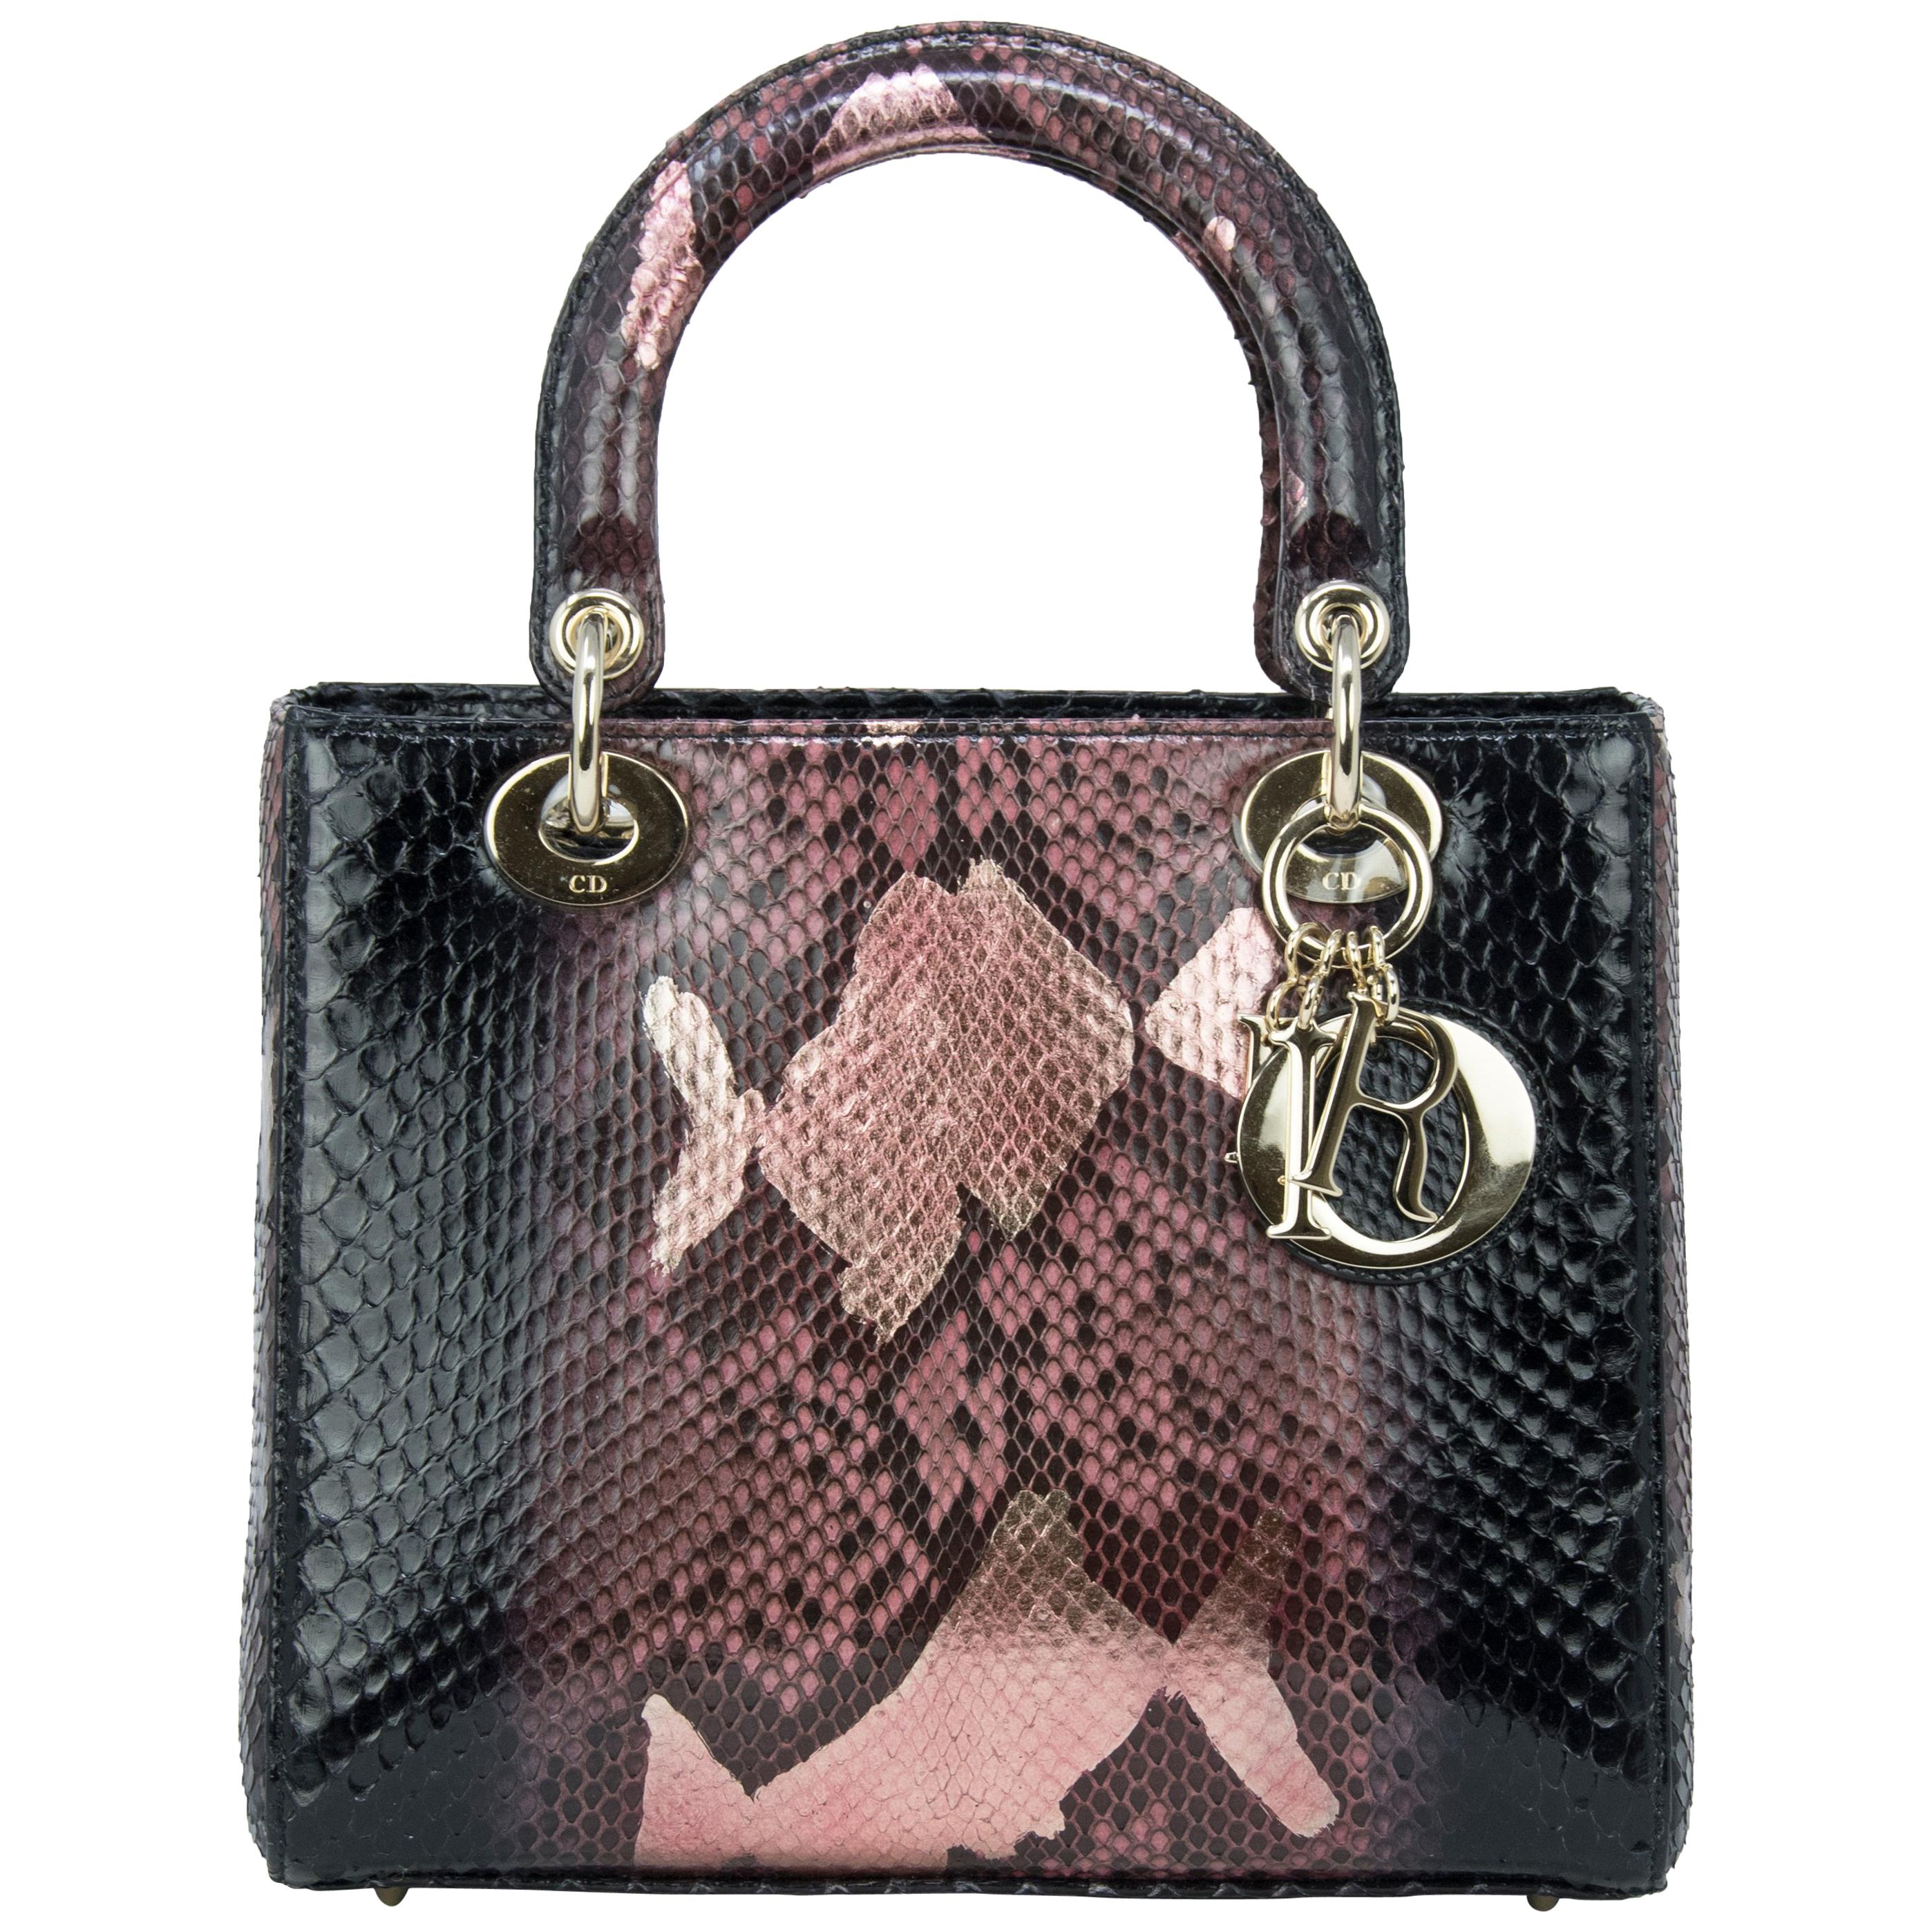 Dior Medium Metallic Python Lady Dior Bag